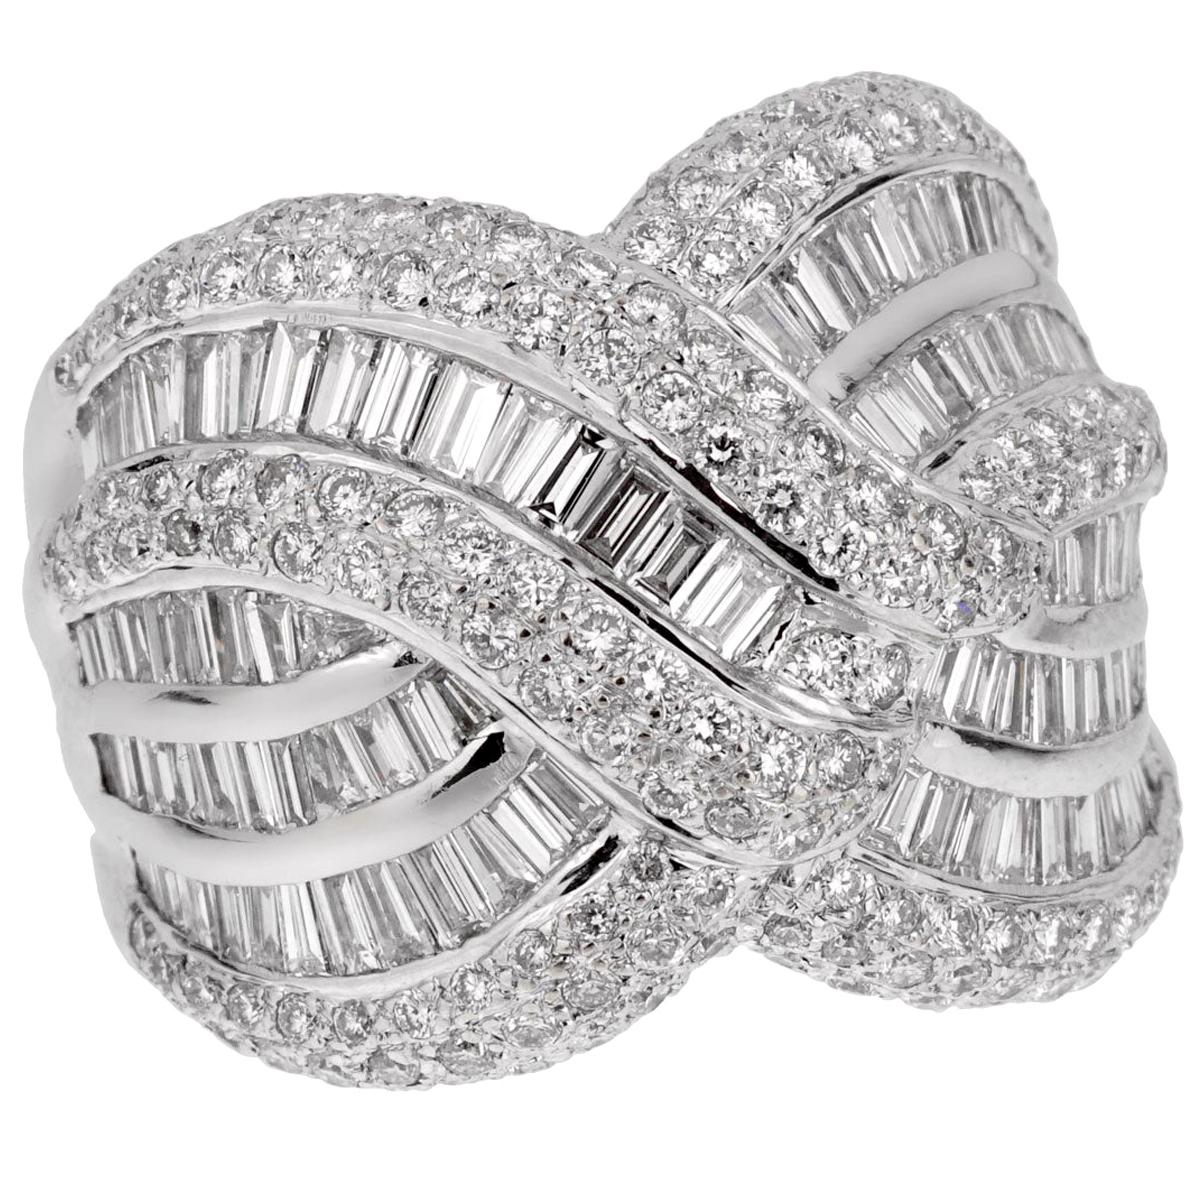 WoCoo Lady Diamond Ring Originality Drill Ring White Drill Women Jewelry Silver,7 